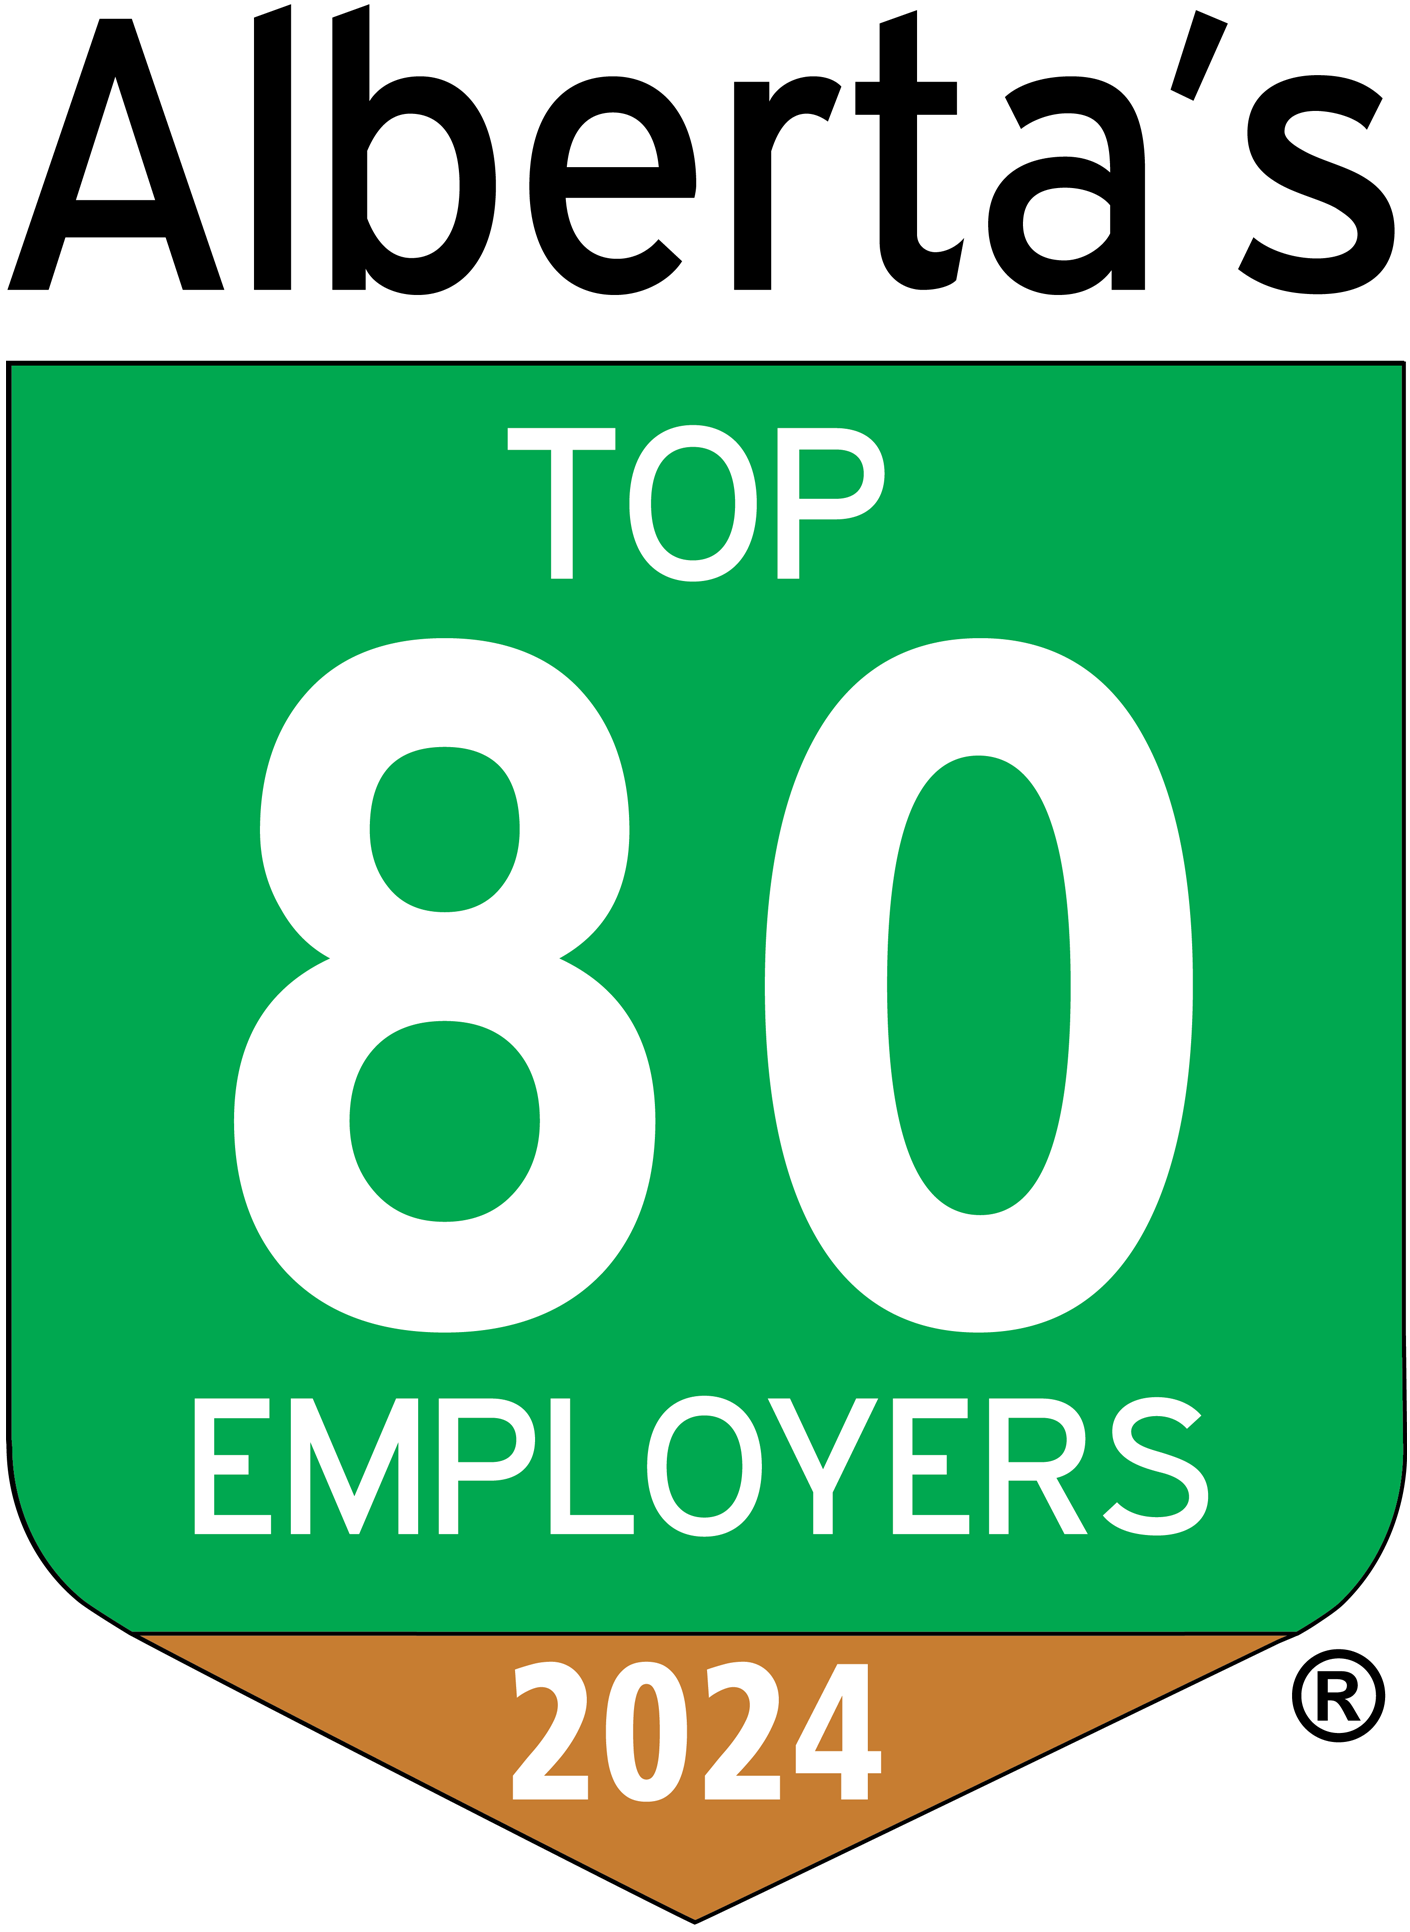 Alberta's' Top 80 Employers